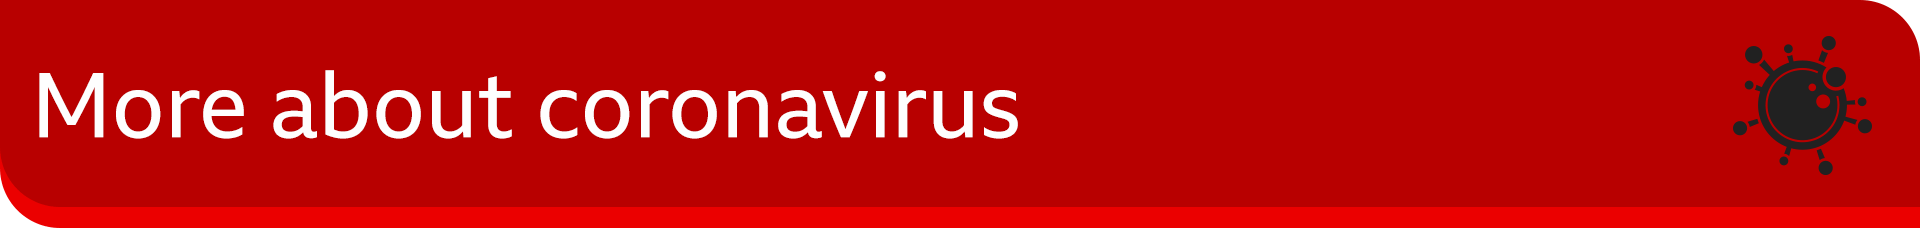 imagem do Banner ler mais sobre coronavírus''more about coronavirus'